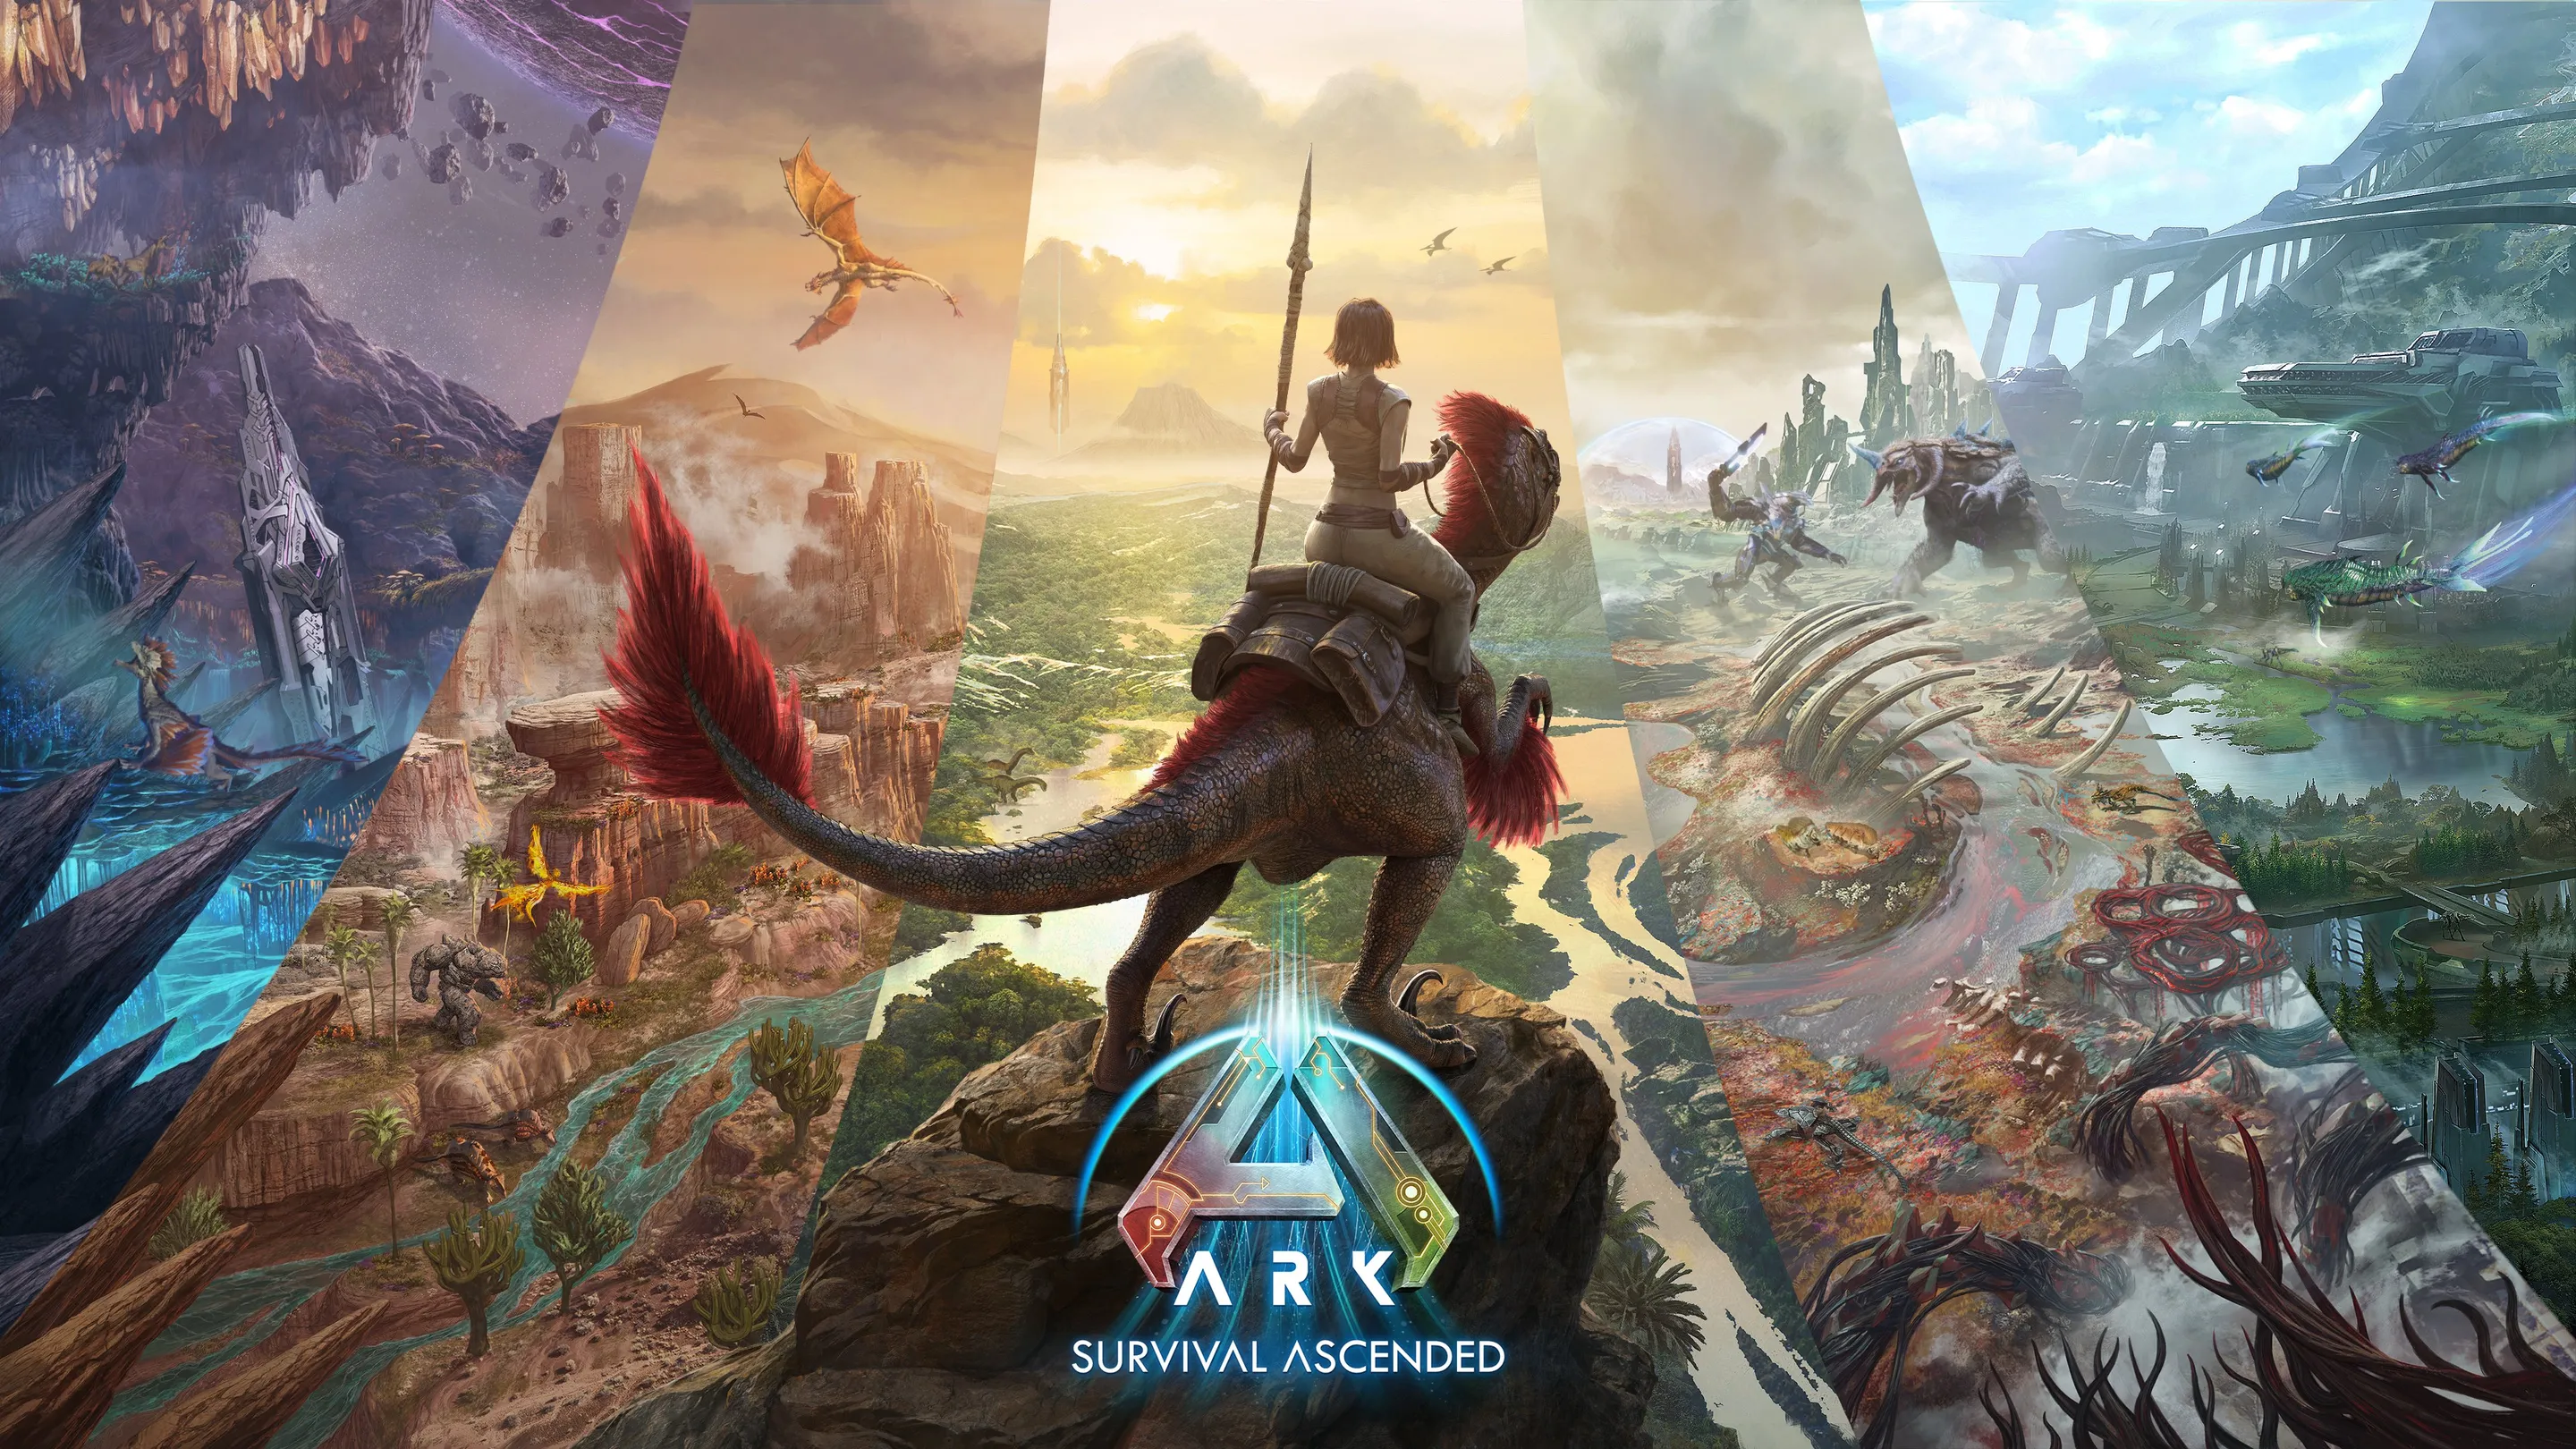 Ark: Survival Evolved remaster delayed to October 2023